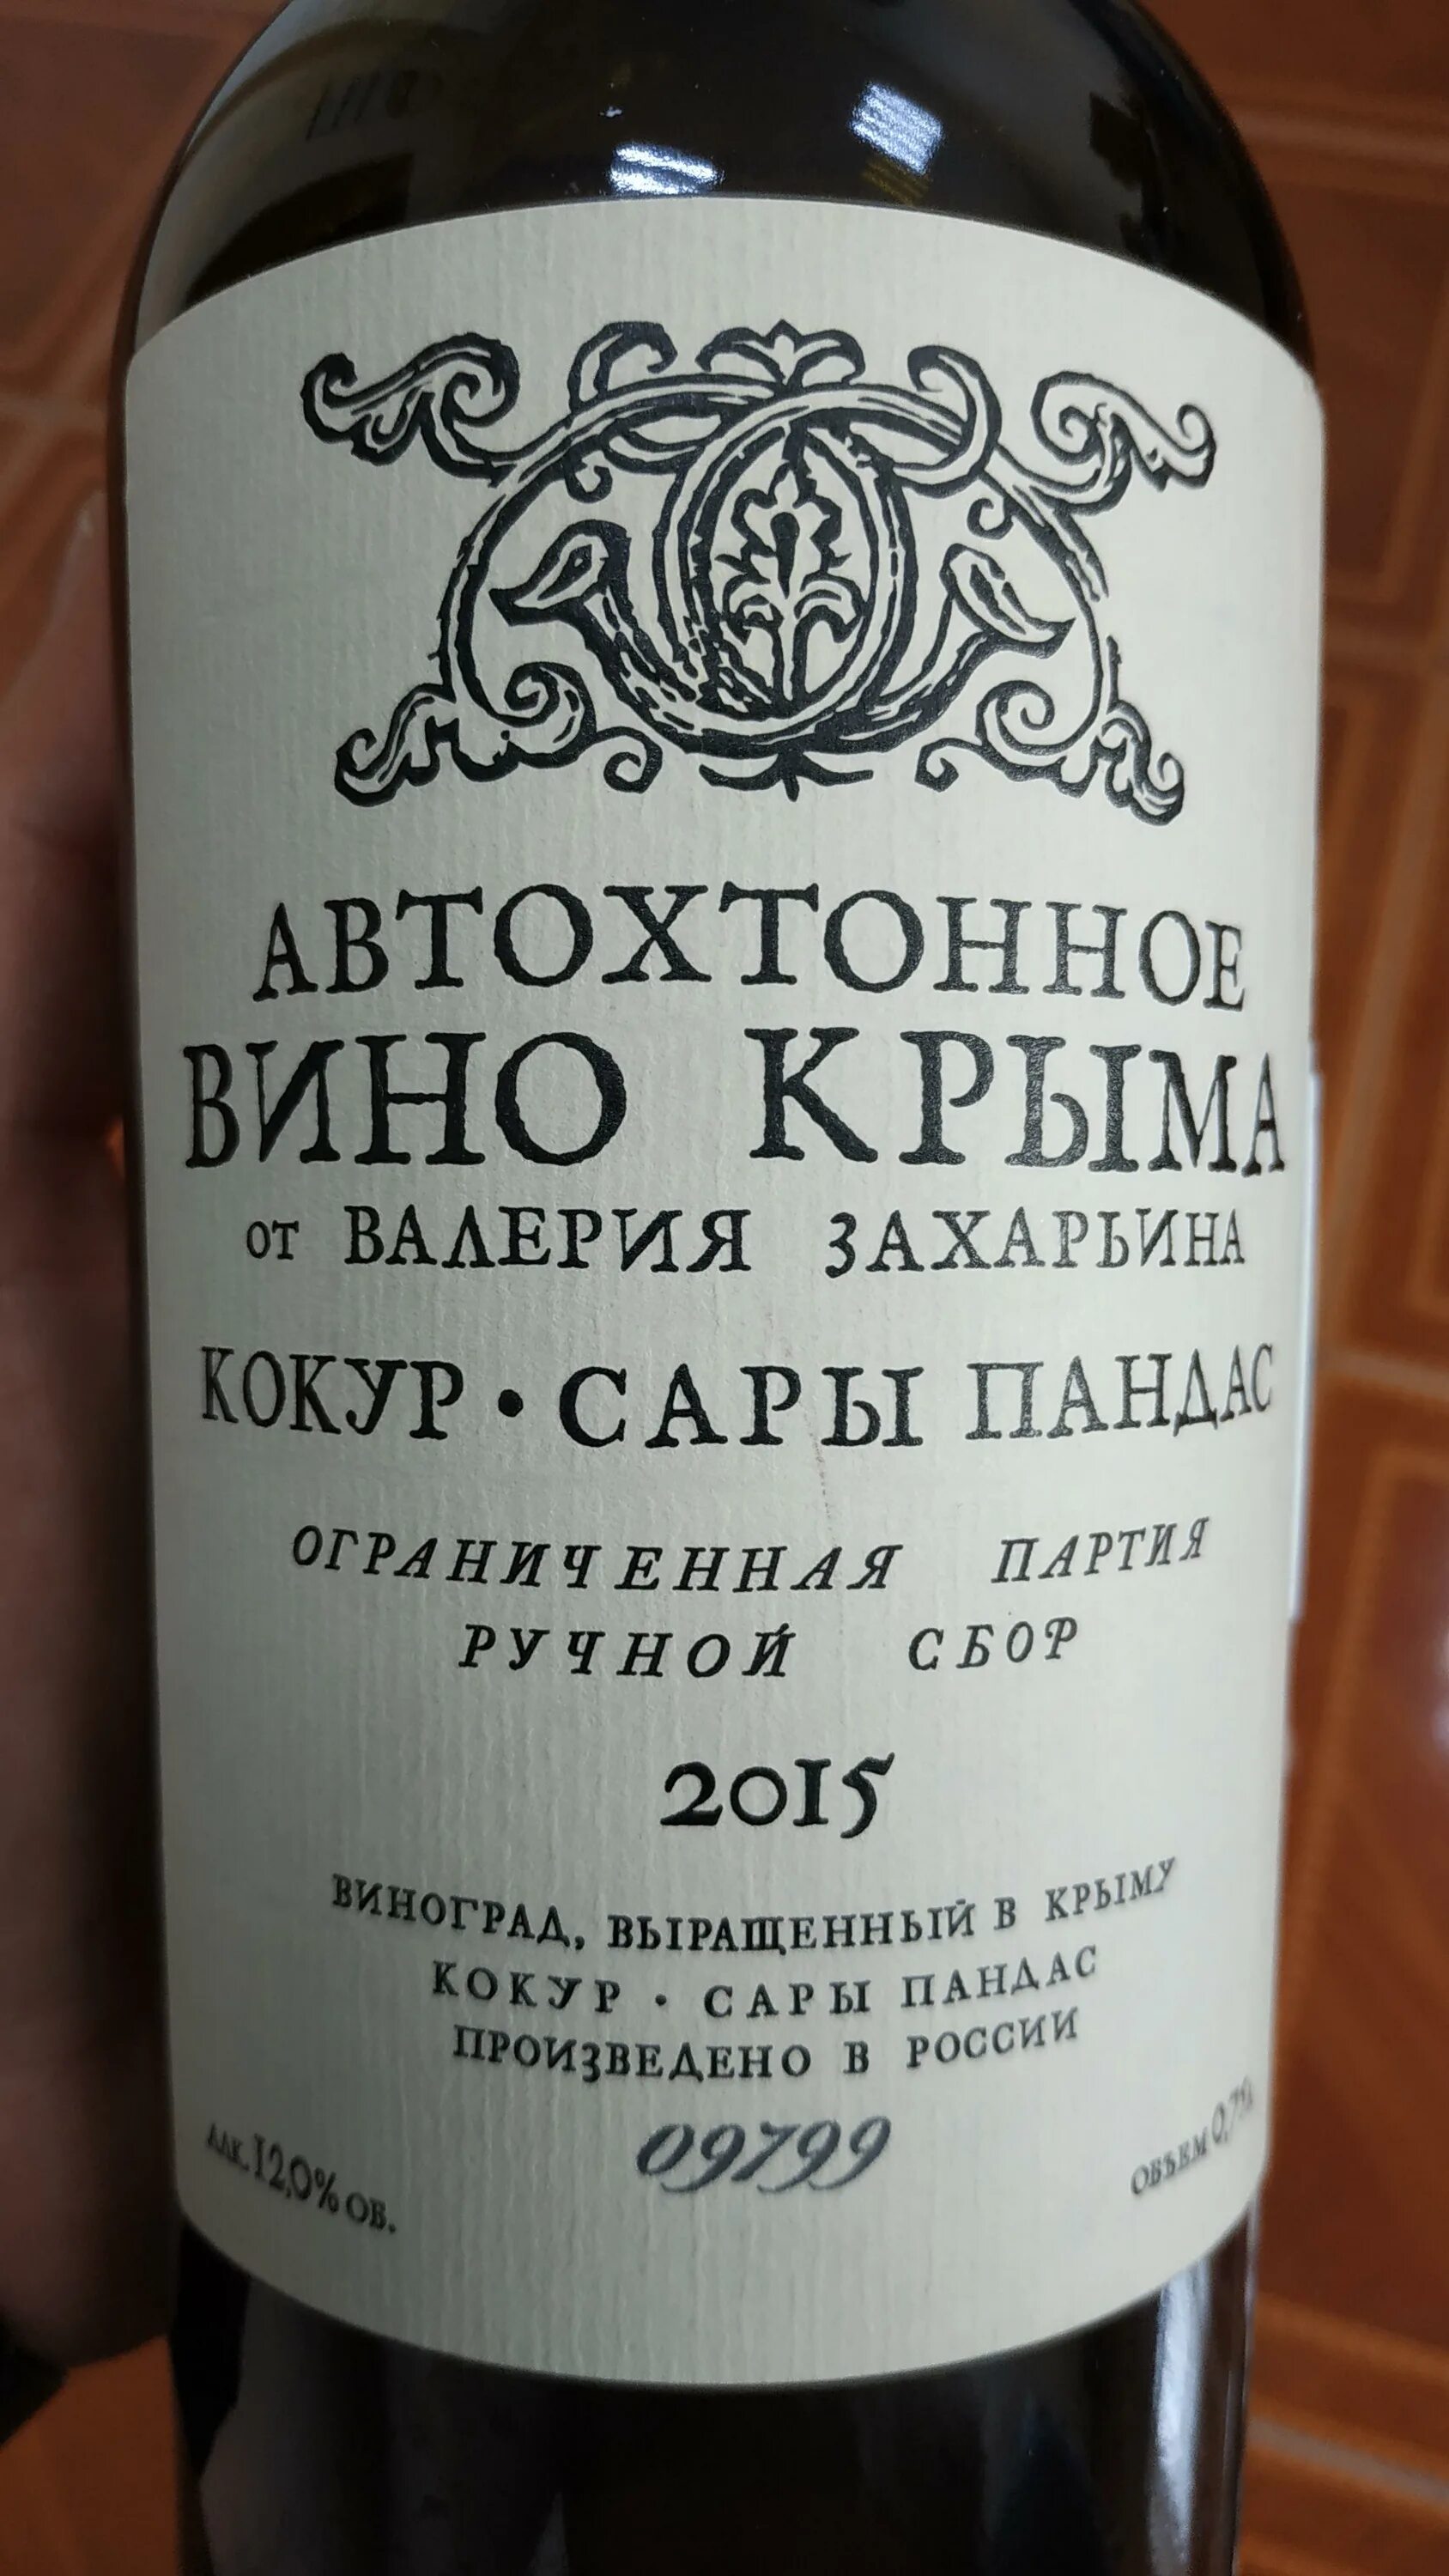 Купить вино захарьин. Кокур Захарьин автохтонное вино. Крымское вино Захарьин.